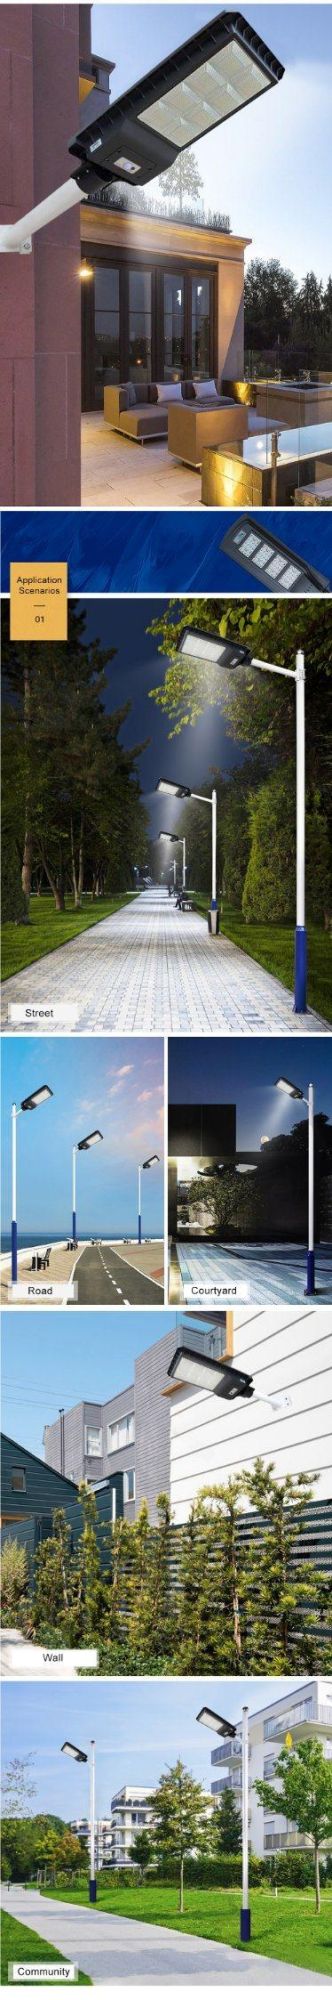 Montion Sensor Low Consumption Outdoor Garden Solar LED Street Light